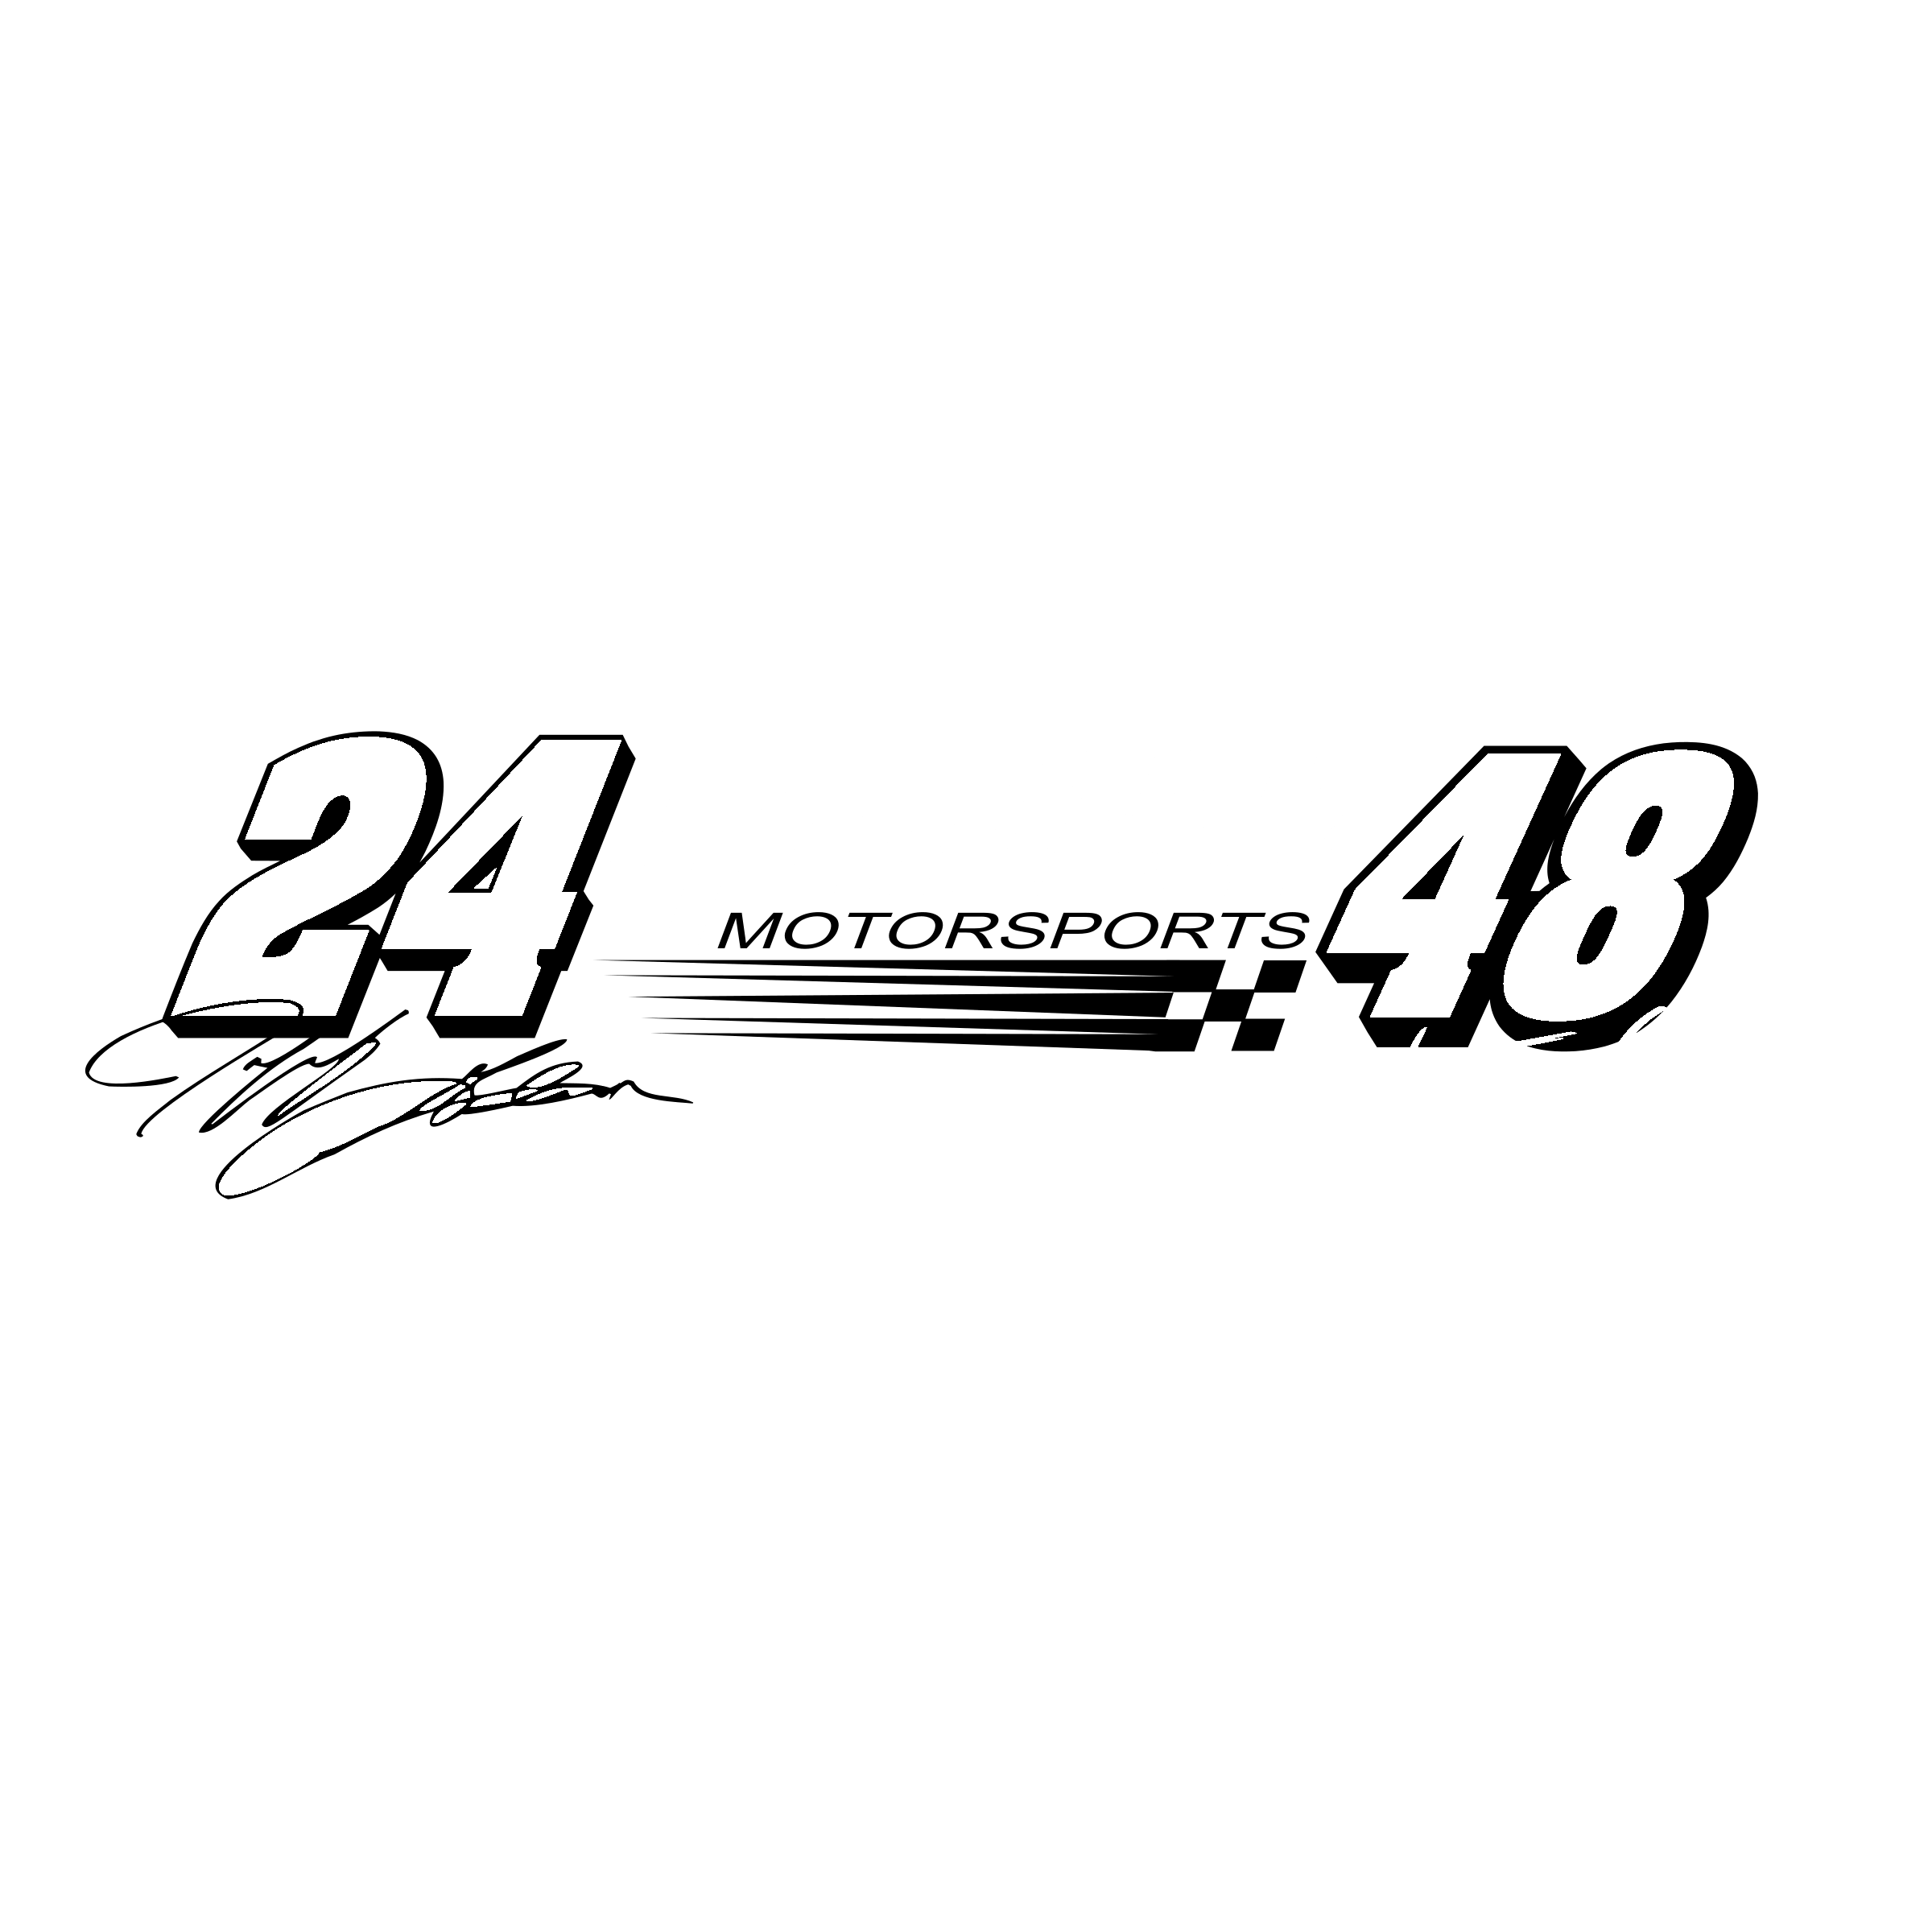 Hendrick Motorsports Logo - Hendrick Motorsports Logo PNG Transparent & SVG Vector - Freebie Supply